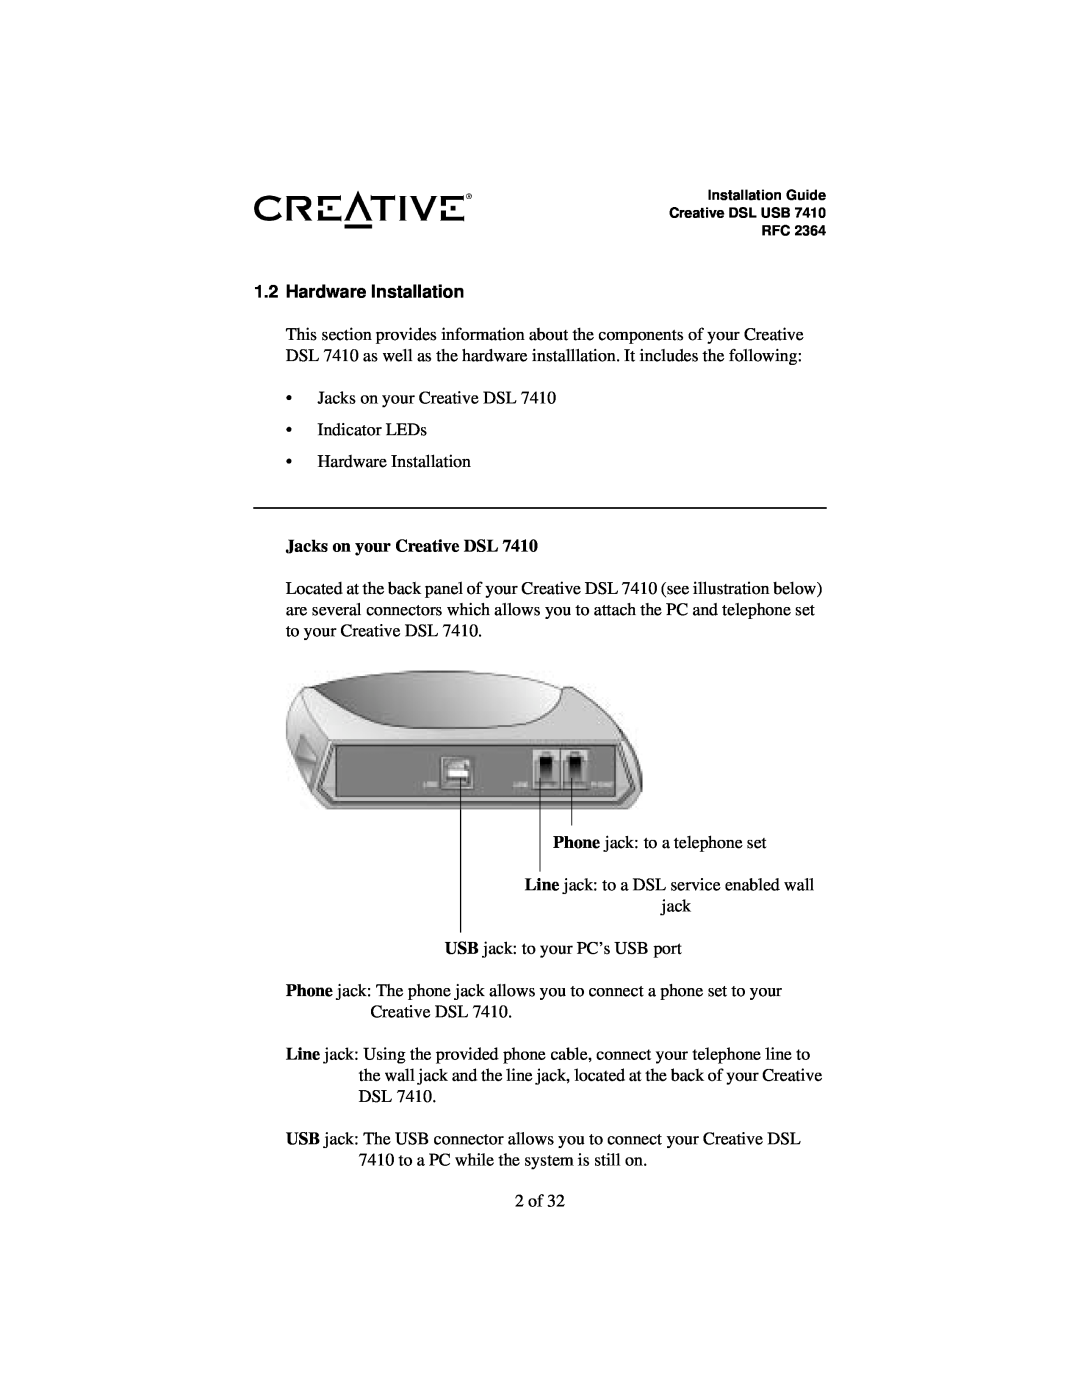 Creative RFC 2364 appendix Hardware Installation, Jacks on your Creative DSL 